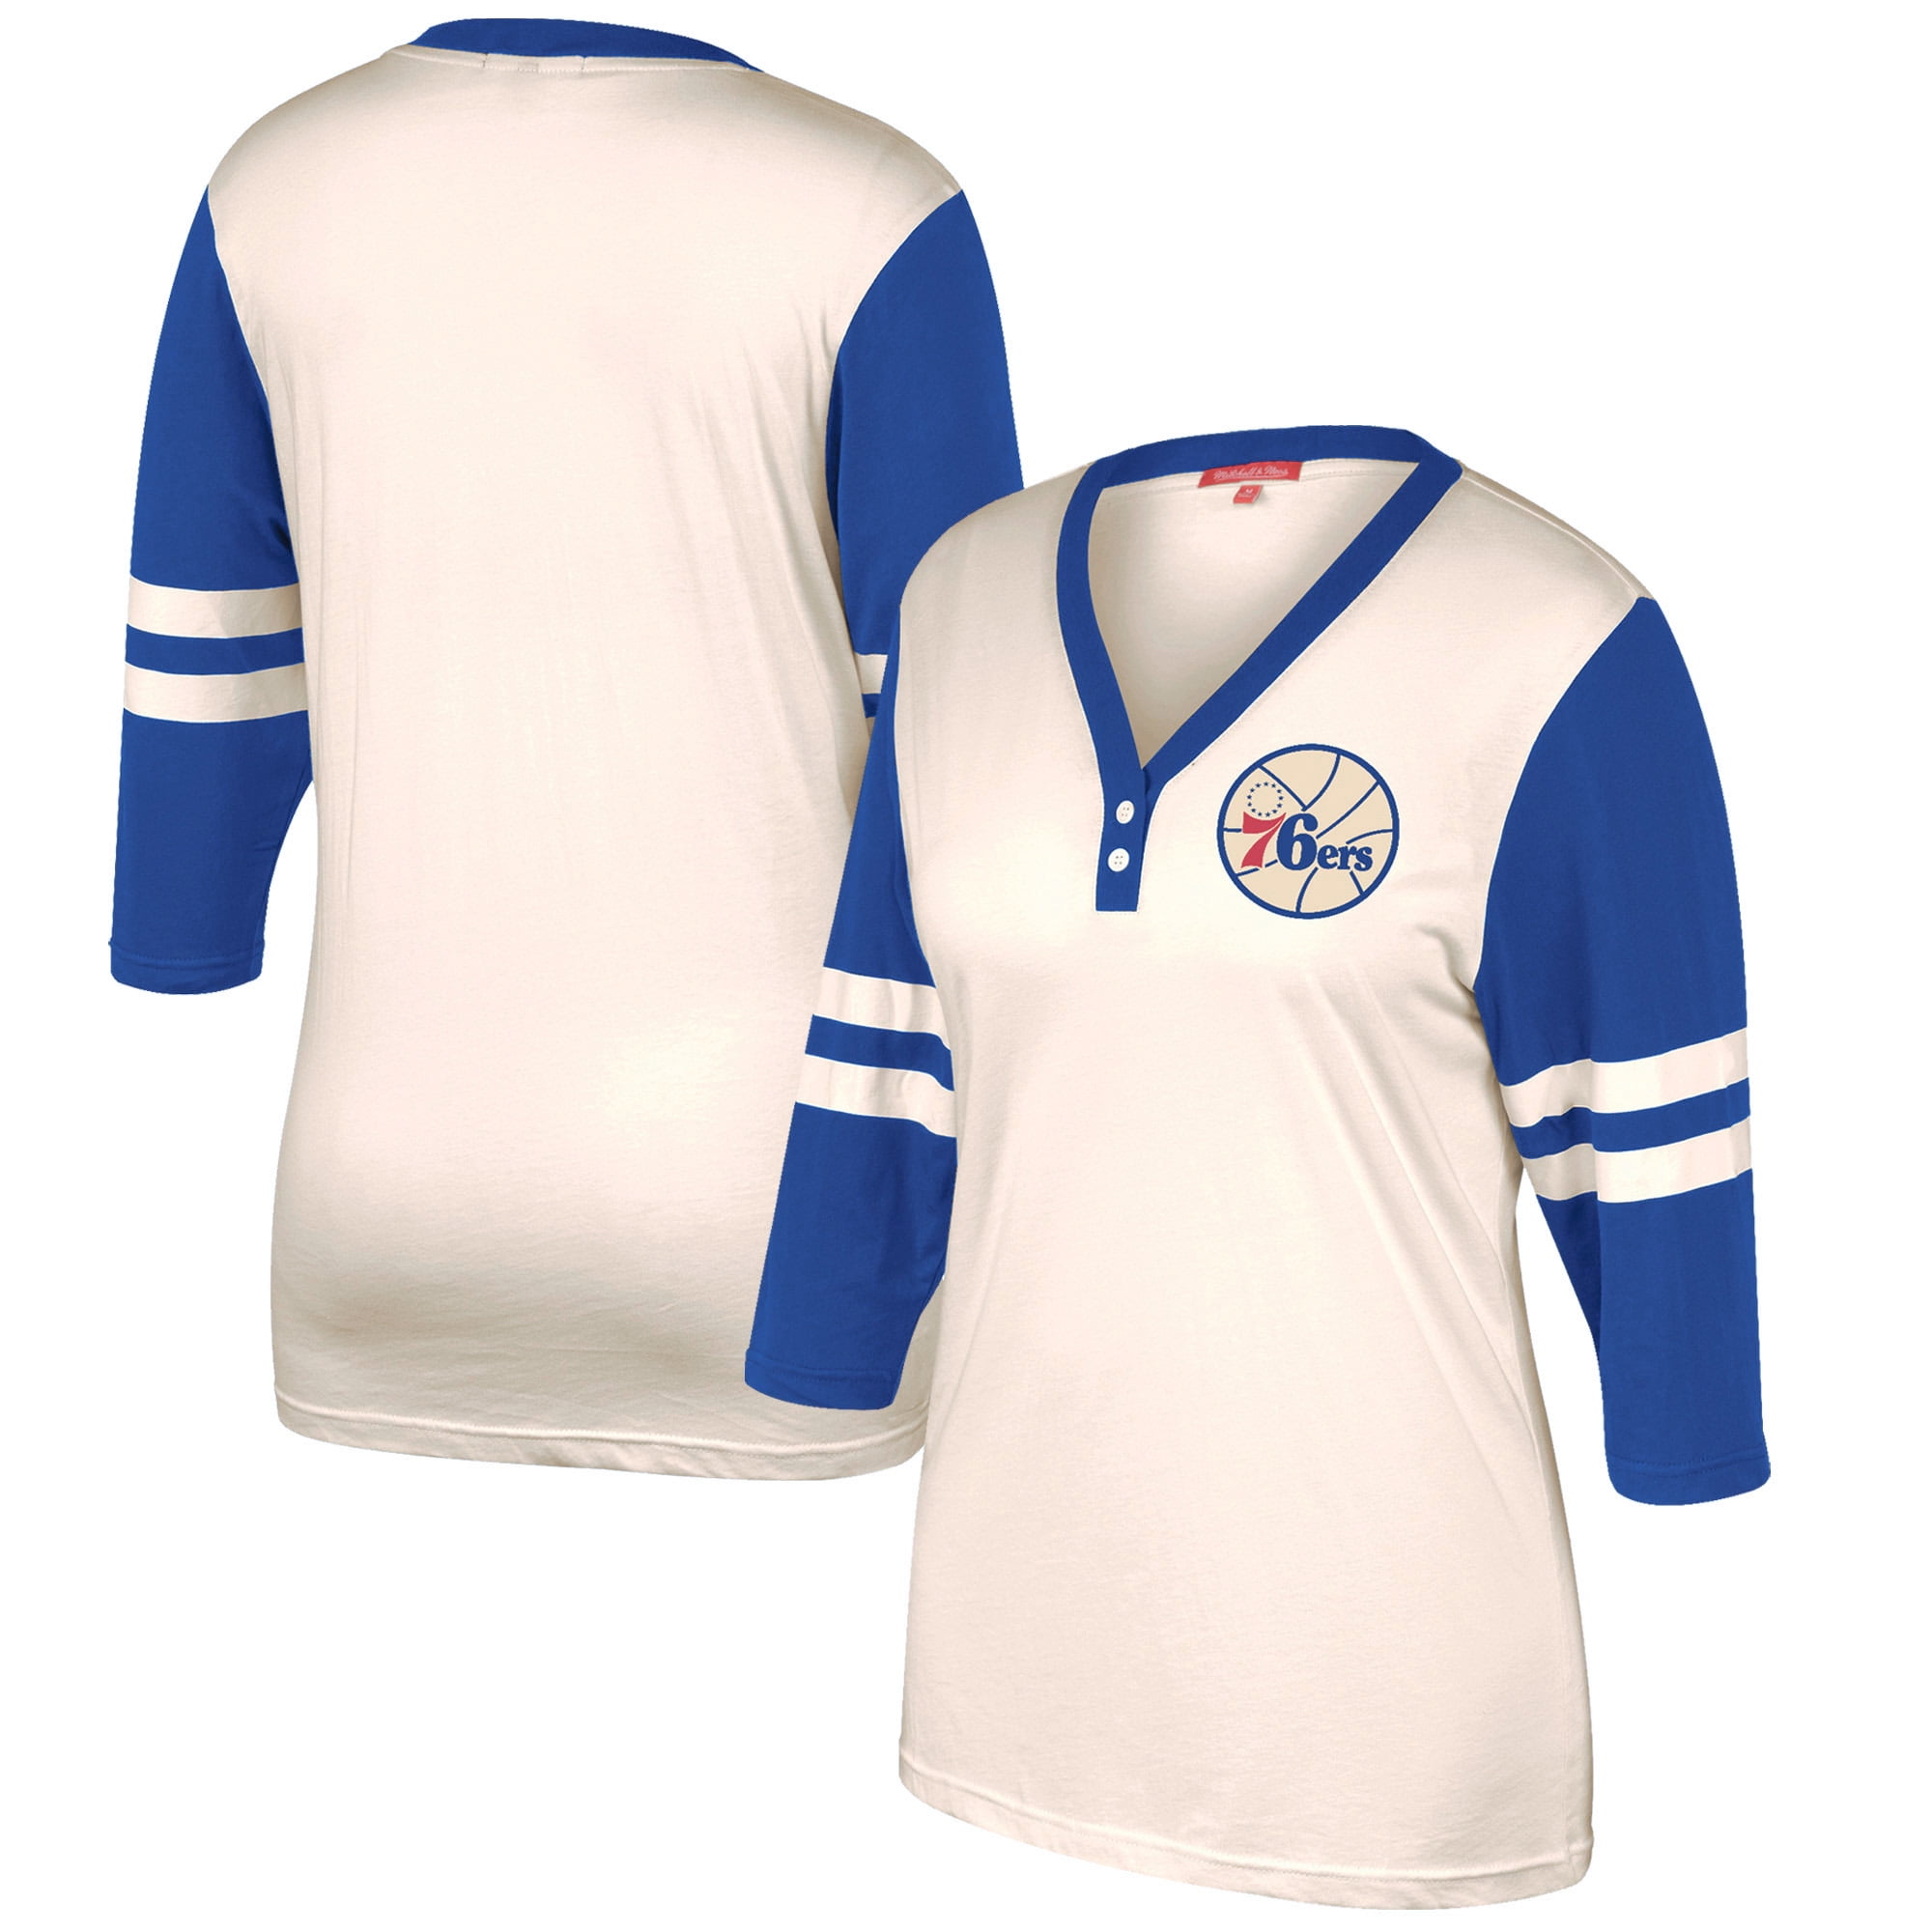 cream 76ers jersey